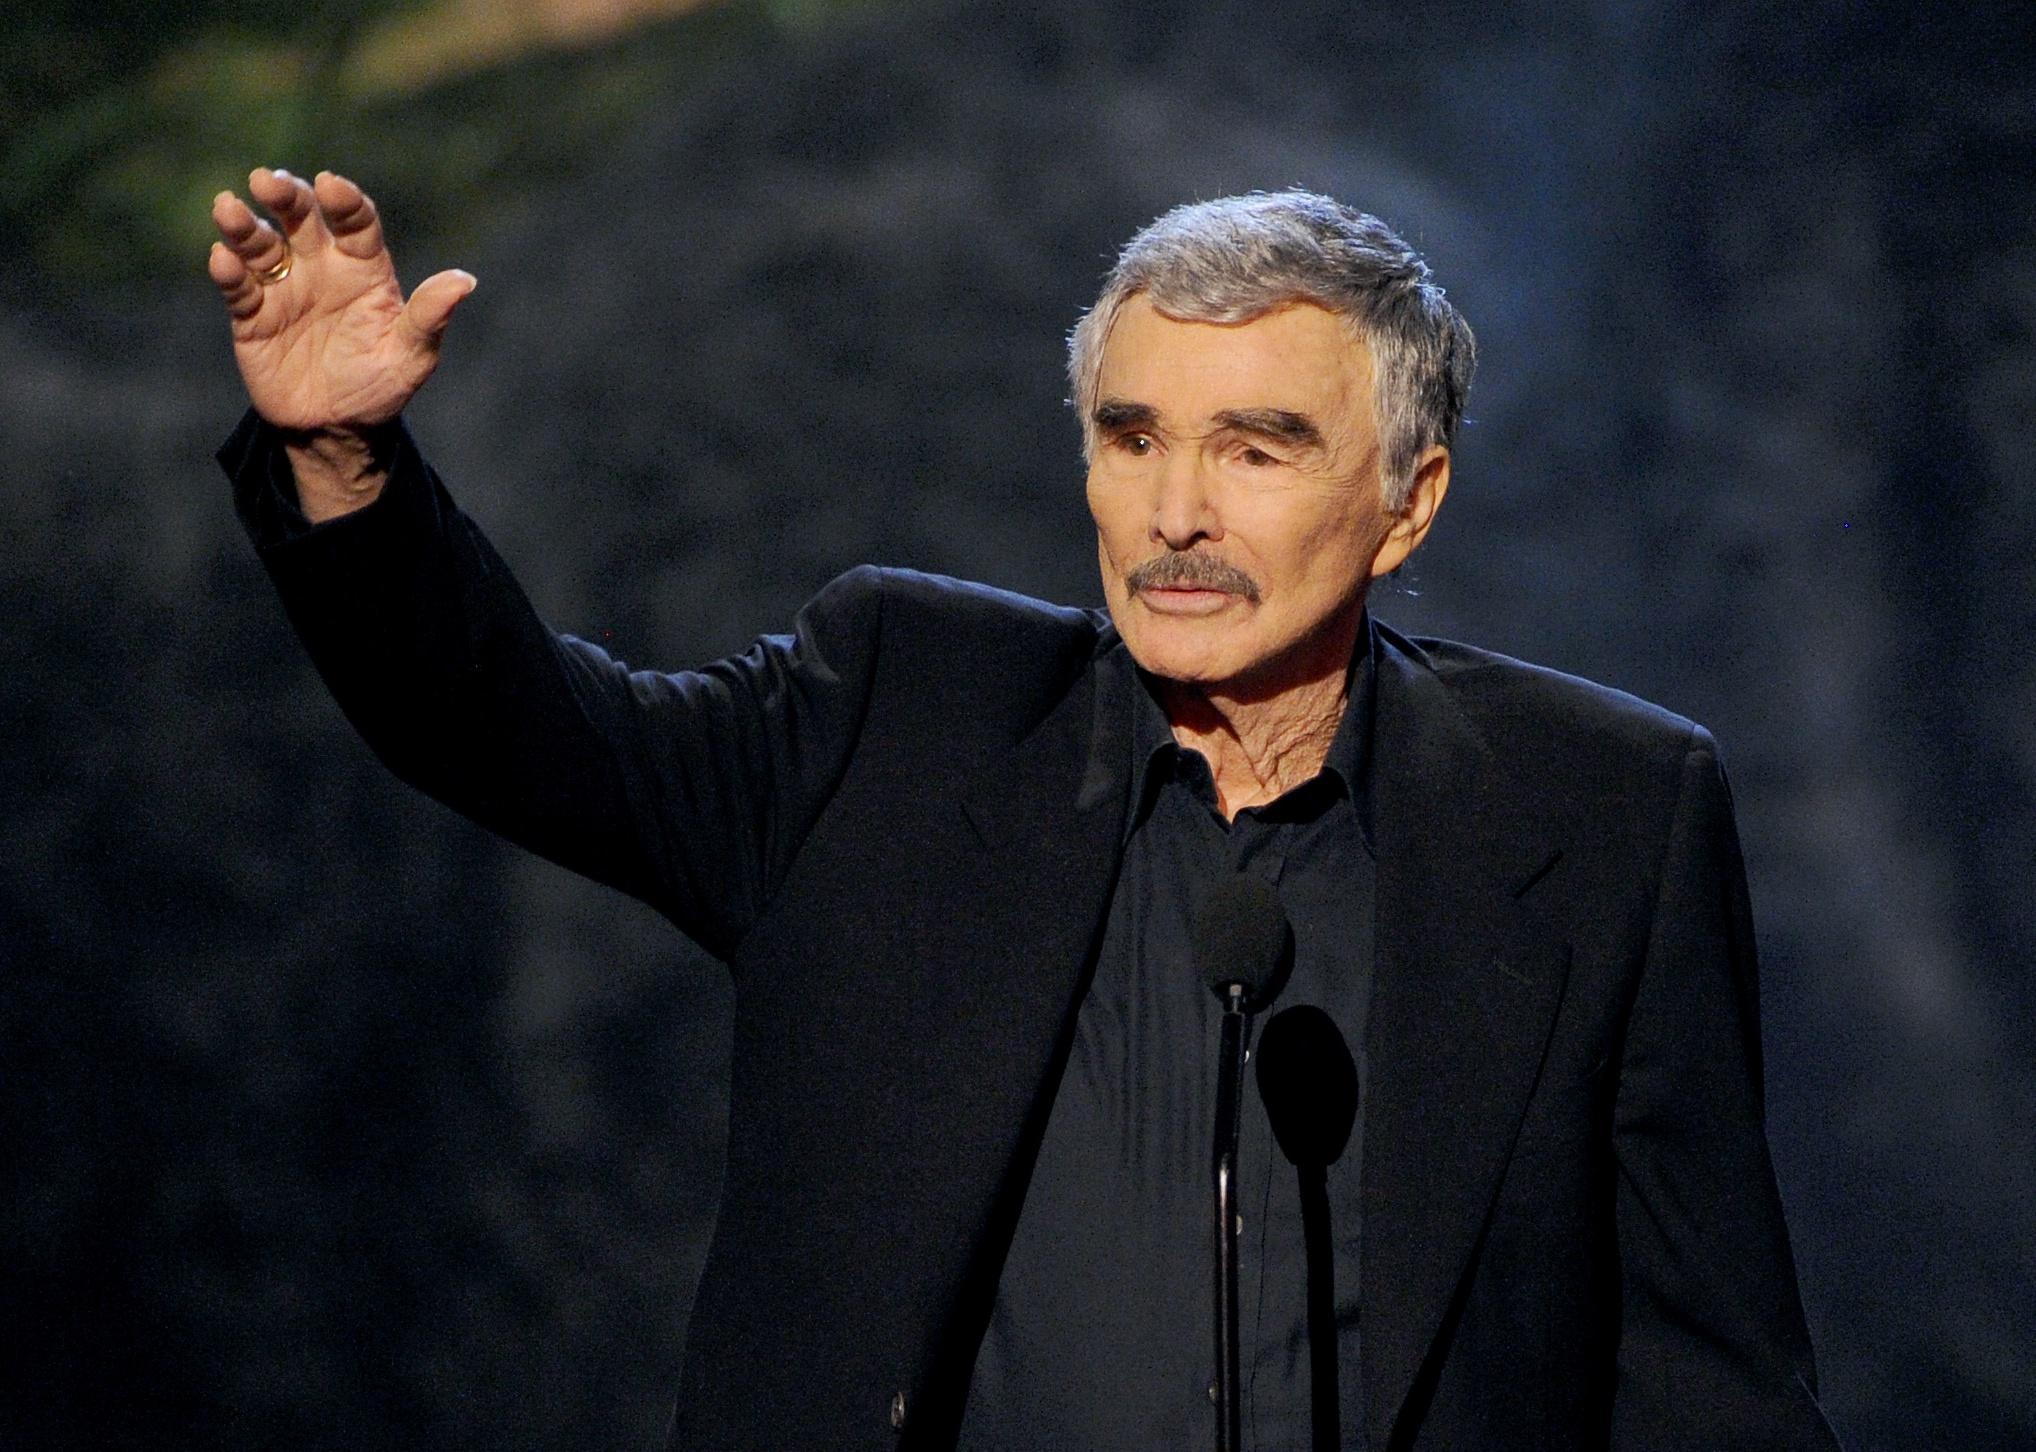 Burt Reynolds accepts award onstage during Spike TV